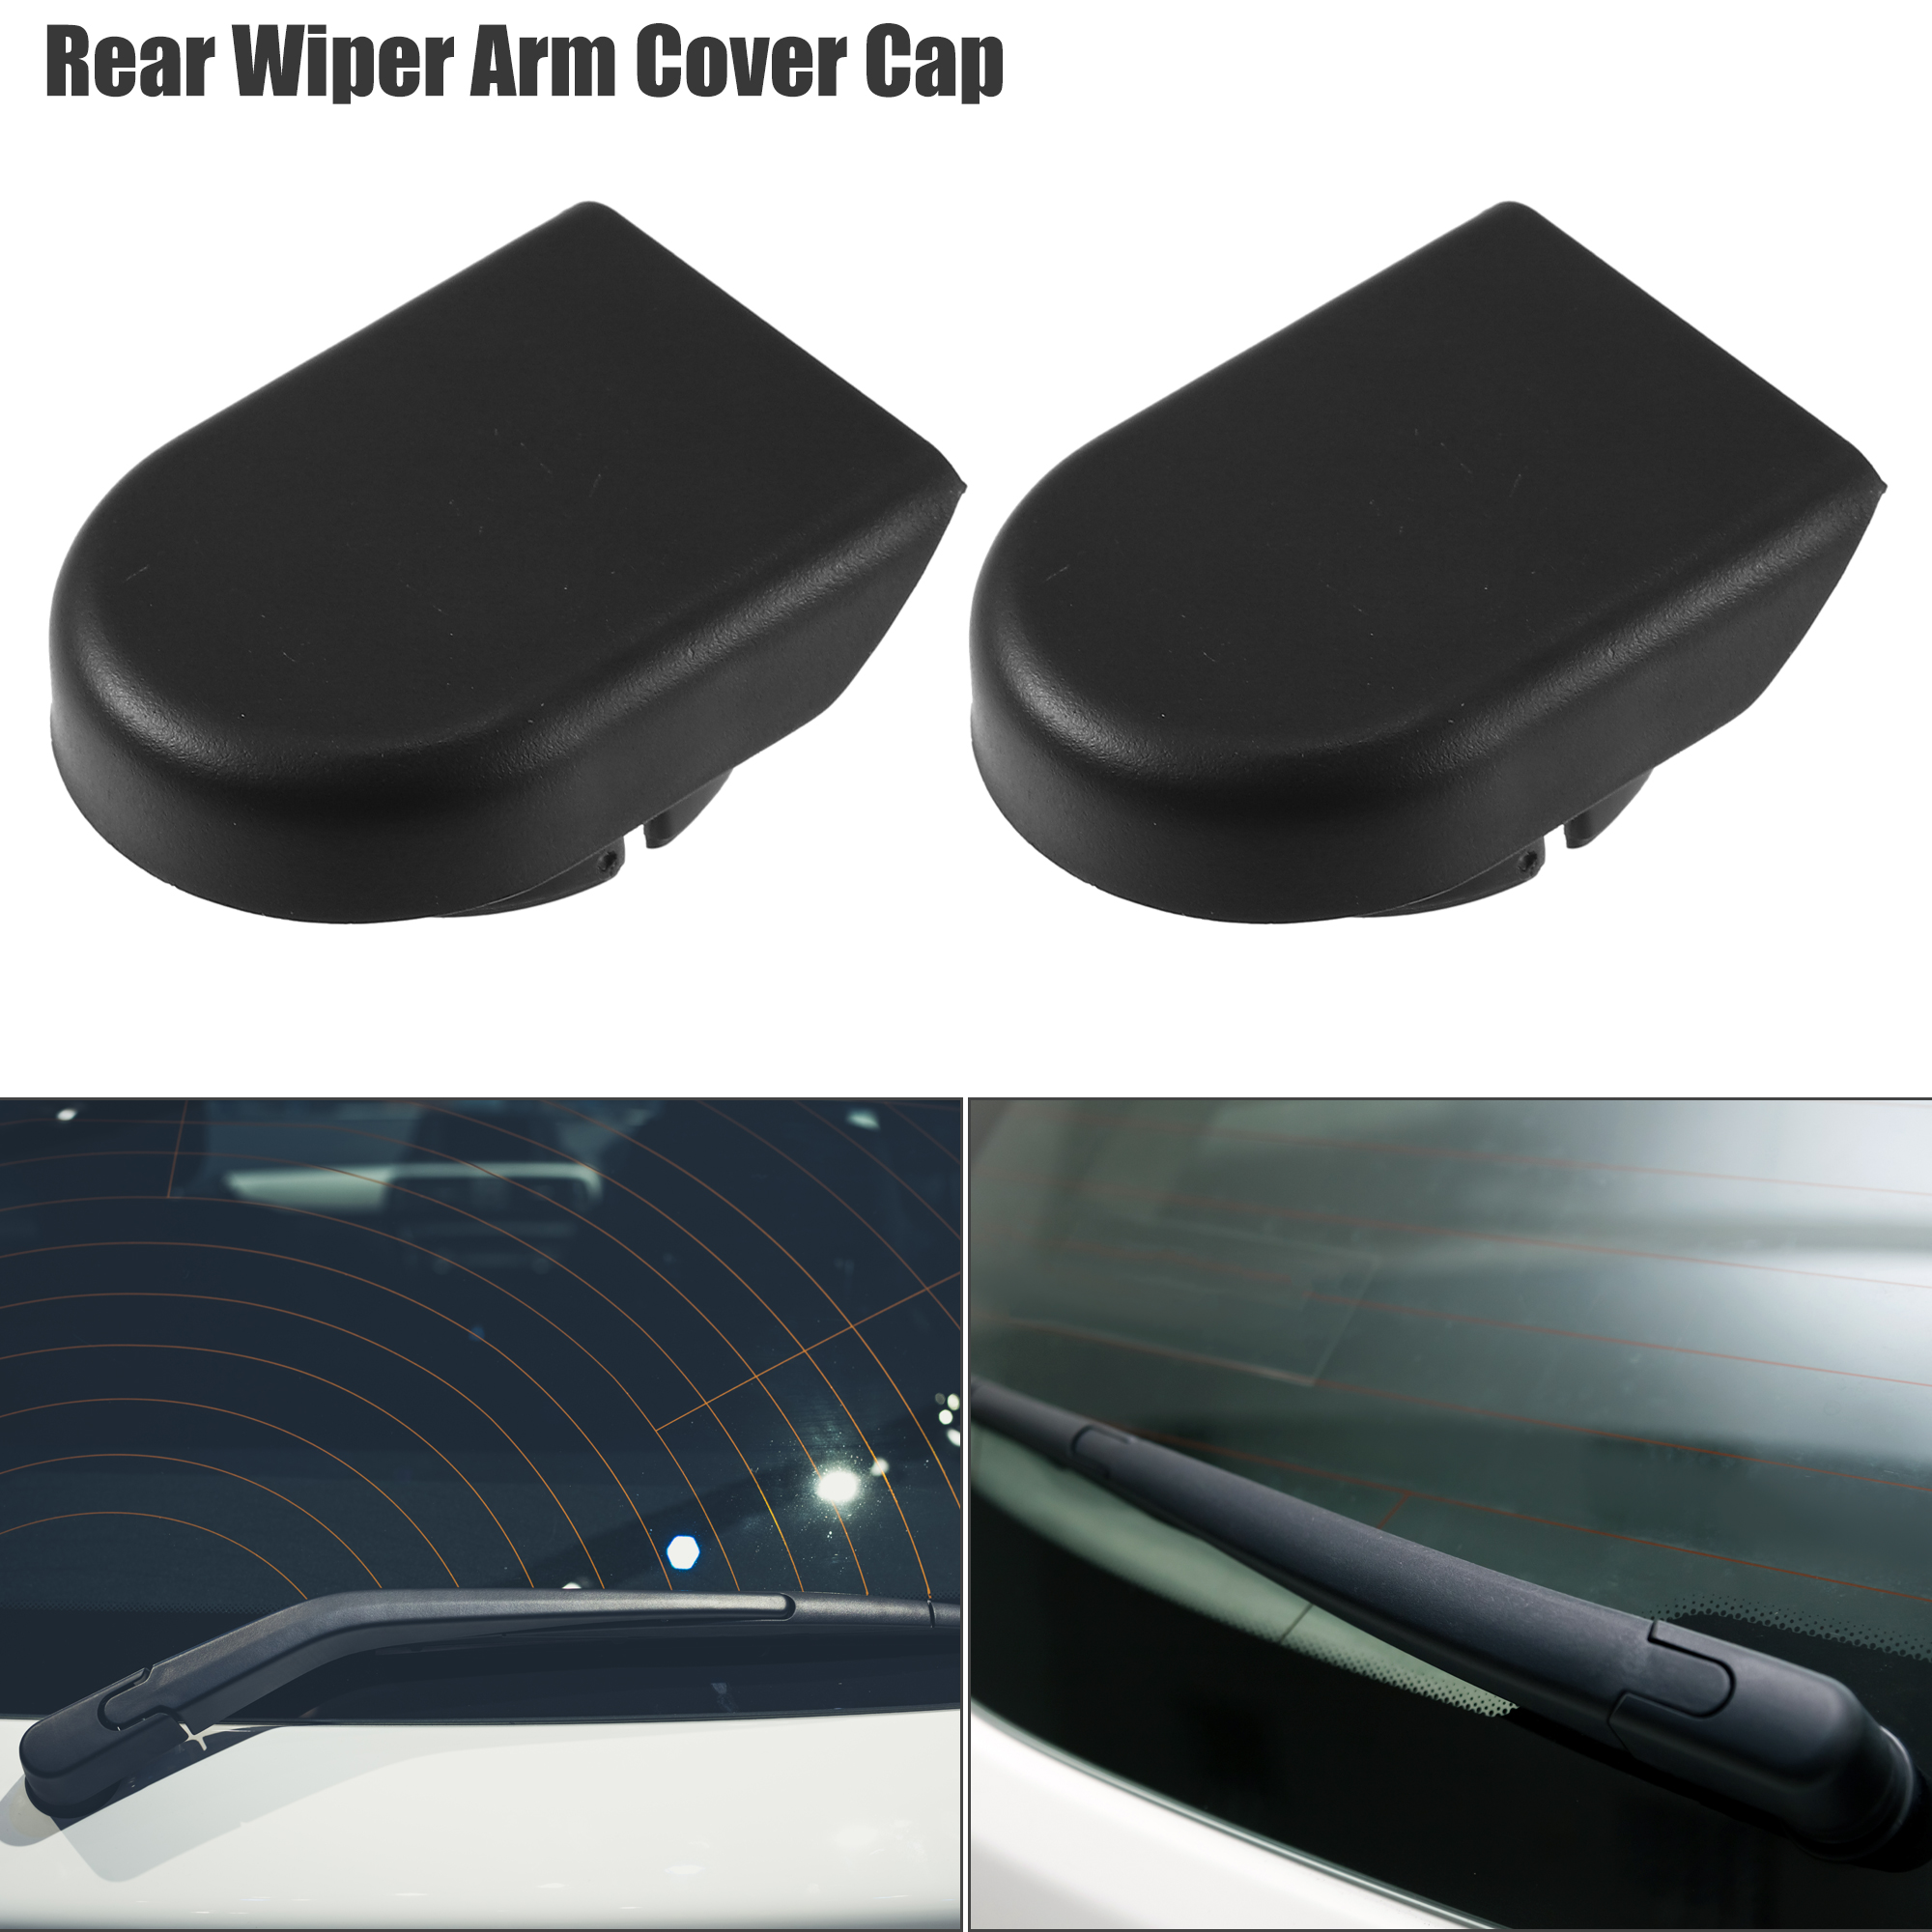 Unique Bargains 2 Pcs Car Rear Windshield Wiper Arm Nut Cover Cap Fit for Mazda 5 CX-5 Black